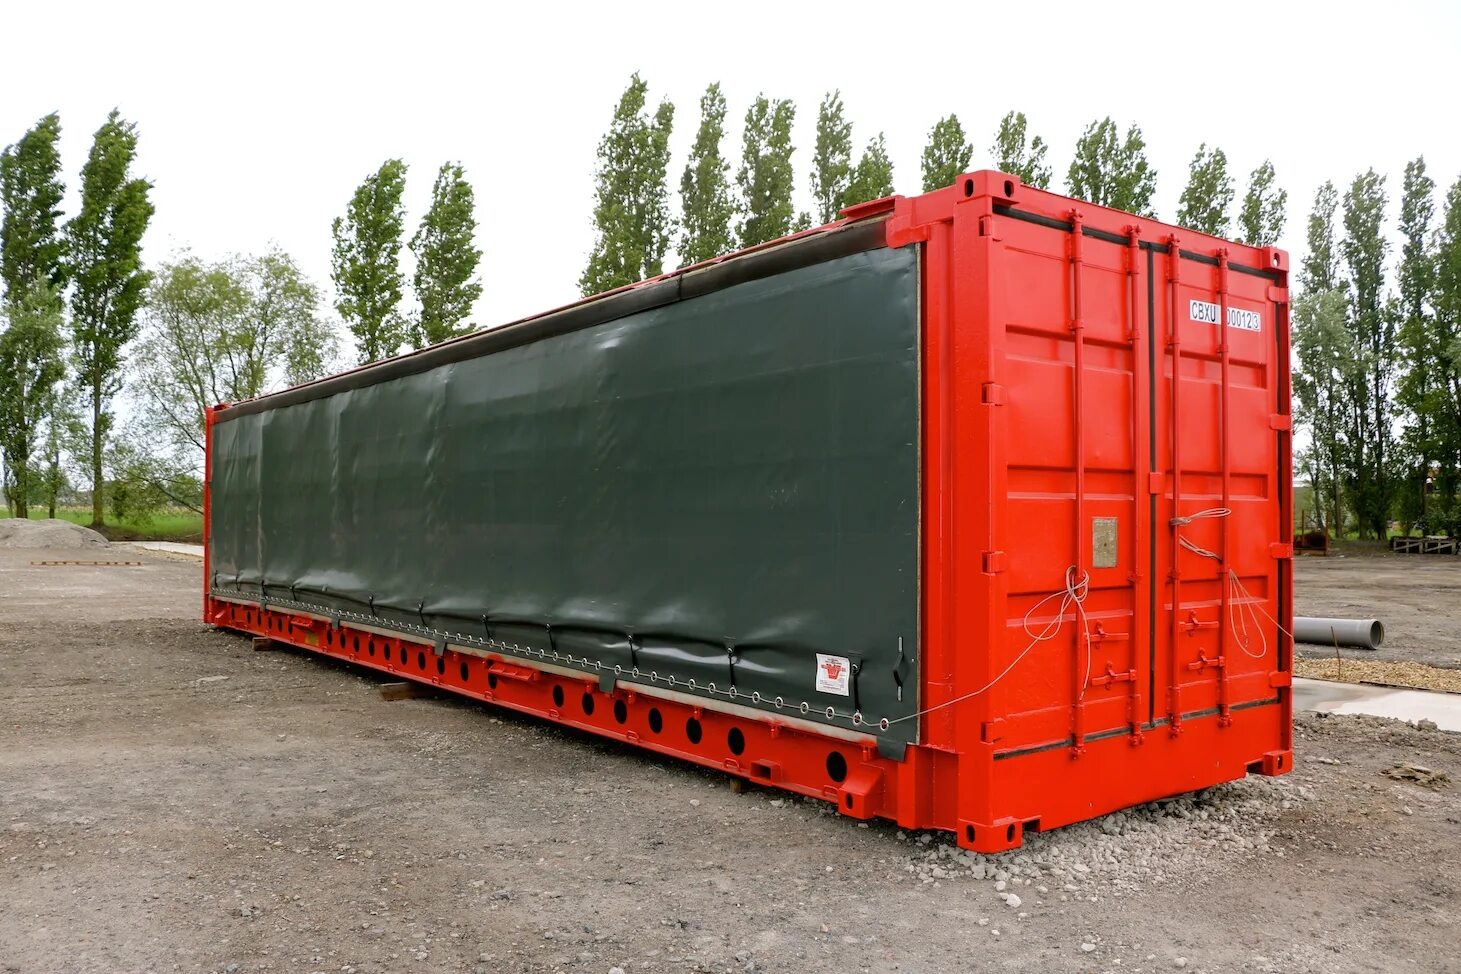 45 Ft контейнер. 45ft Container. Container 45ft Trailer. Морской контейнер 45 футов с боковыми тентами. Морской контейнер 45 футов